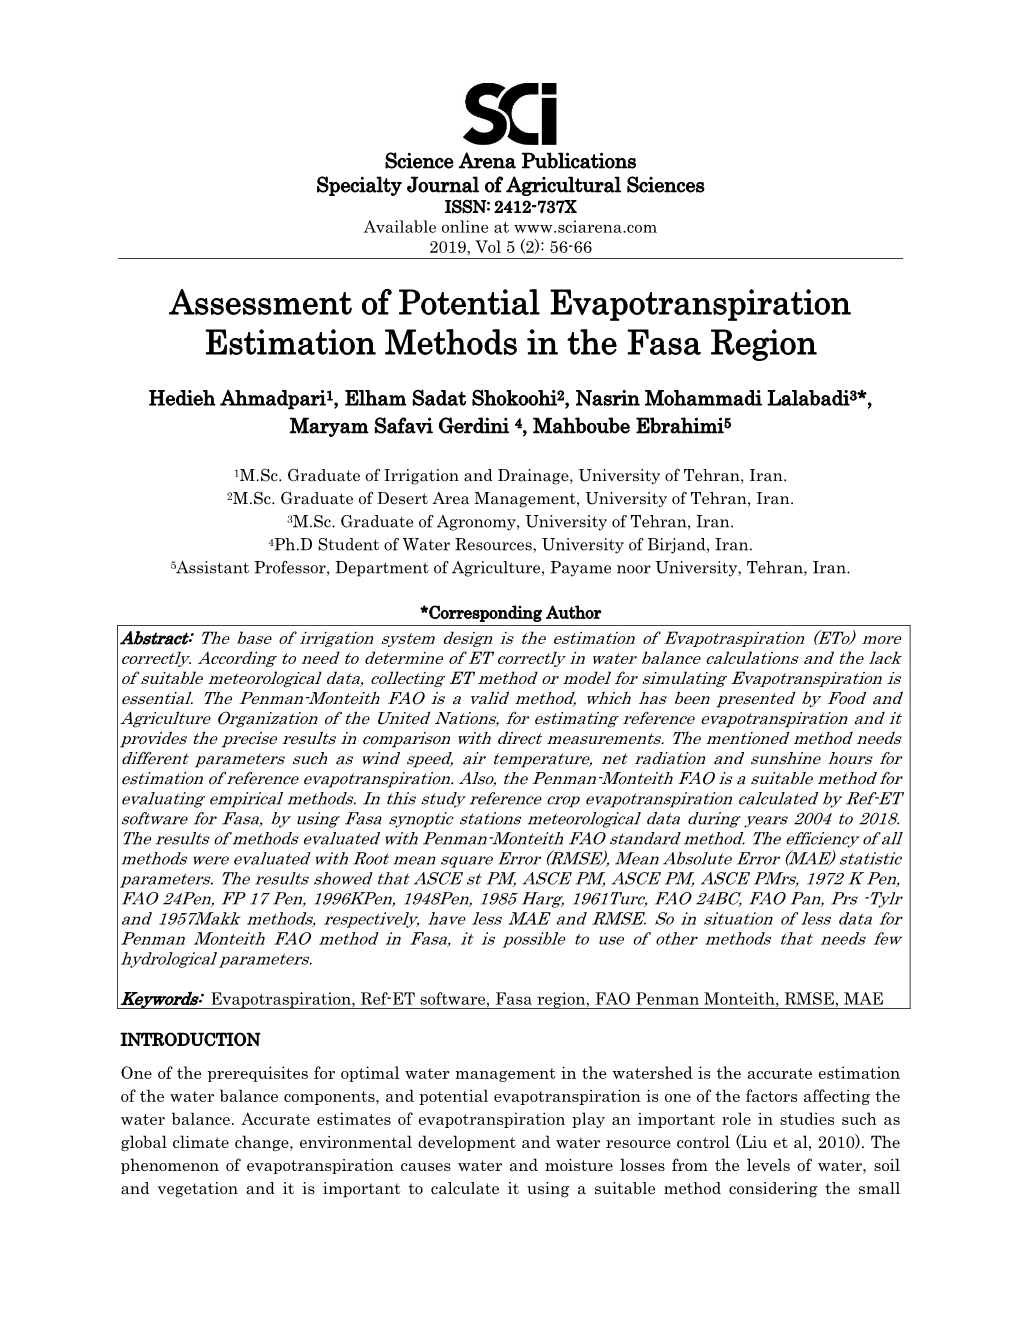 Assessment of Potential Evapotranspiration Estimation Methods in the Fasa Region